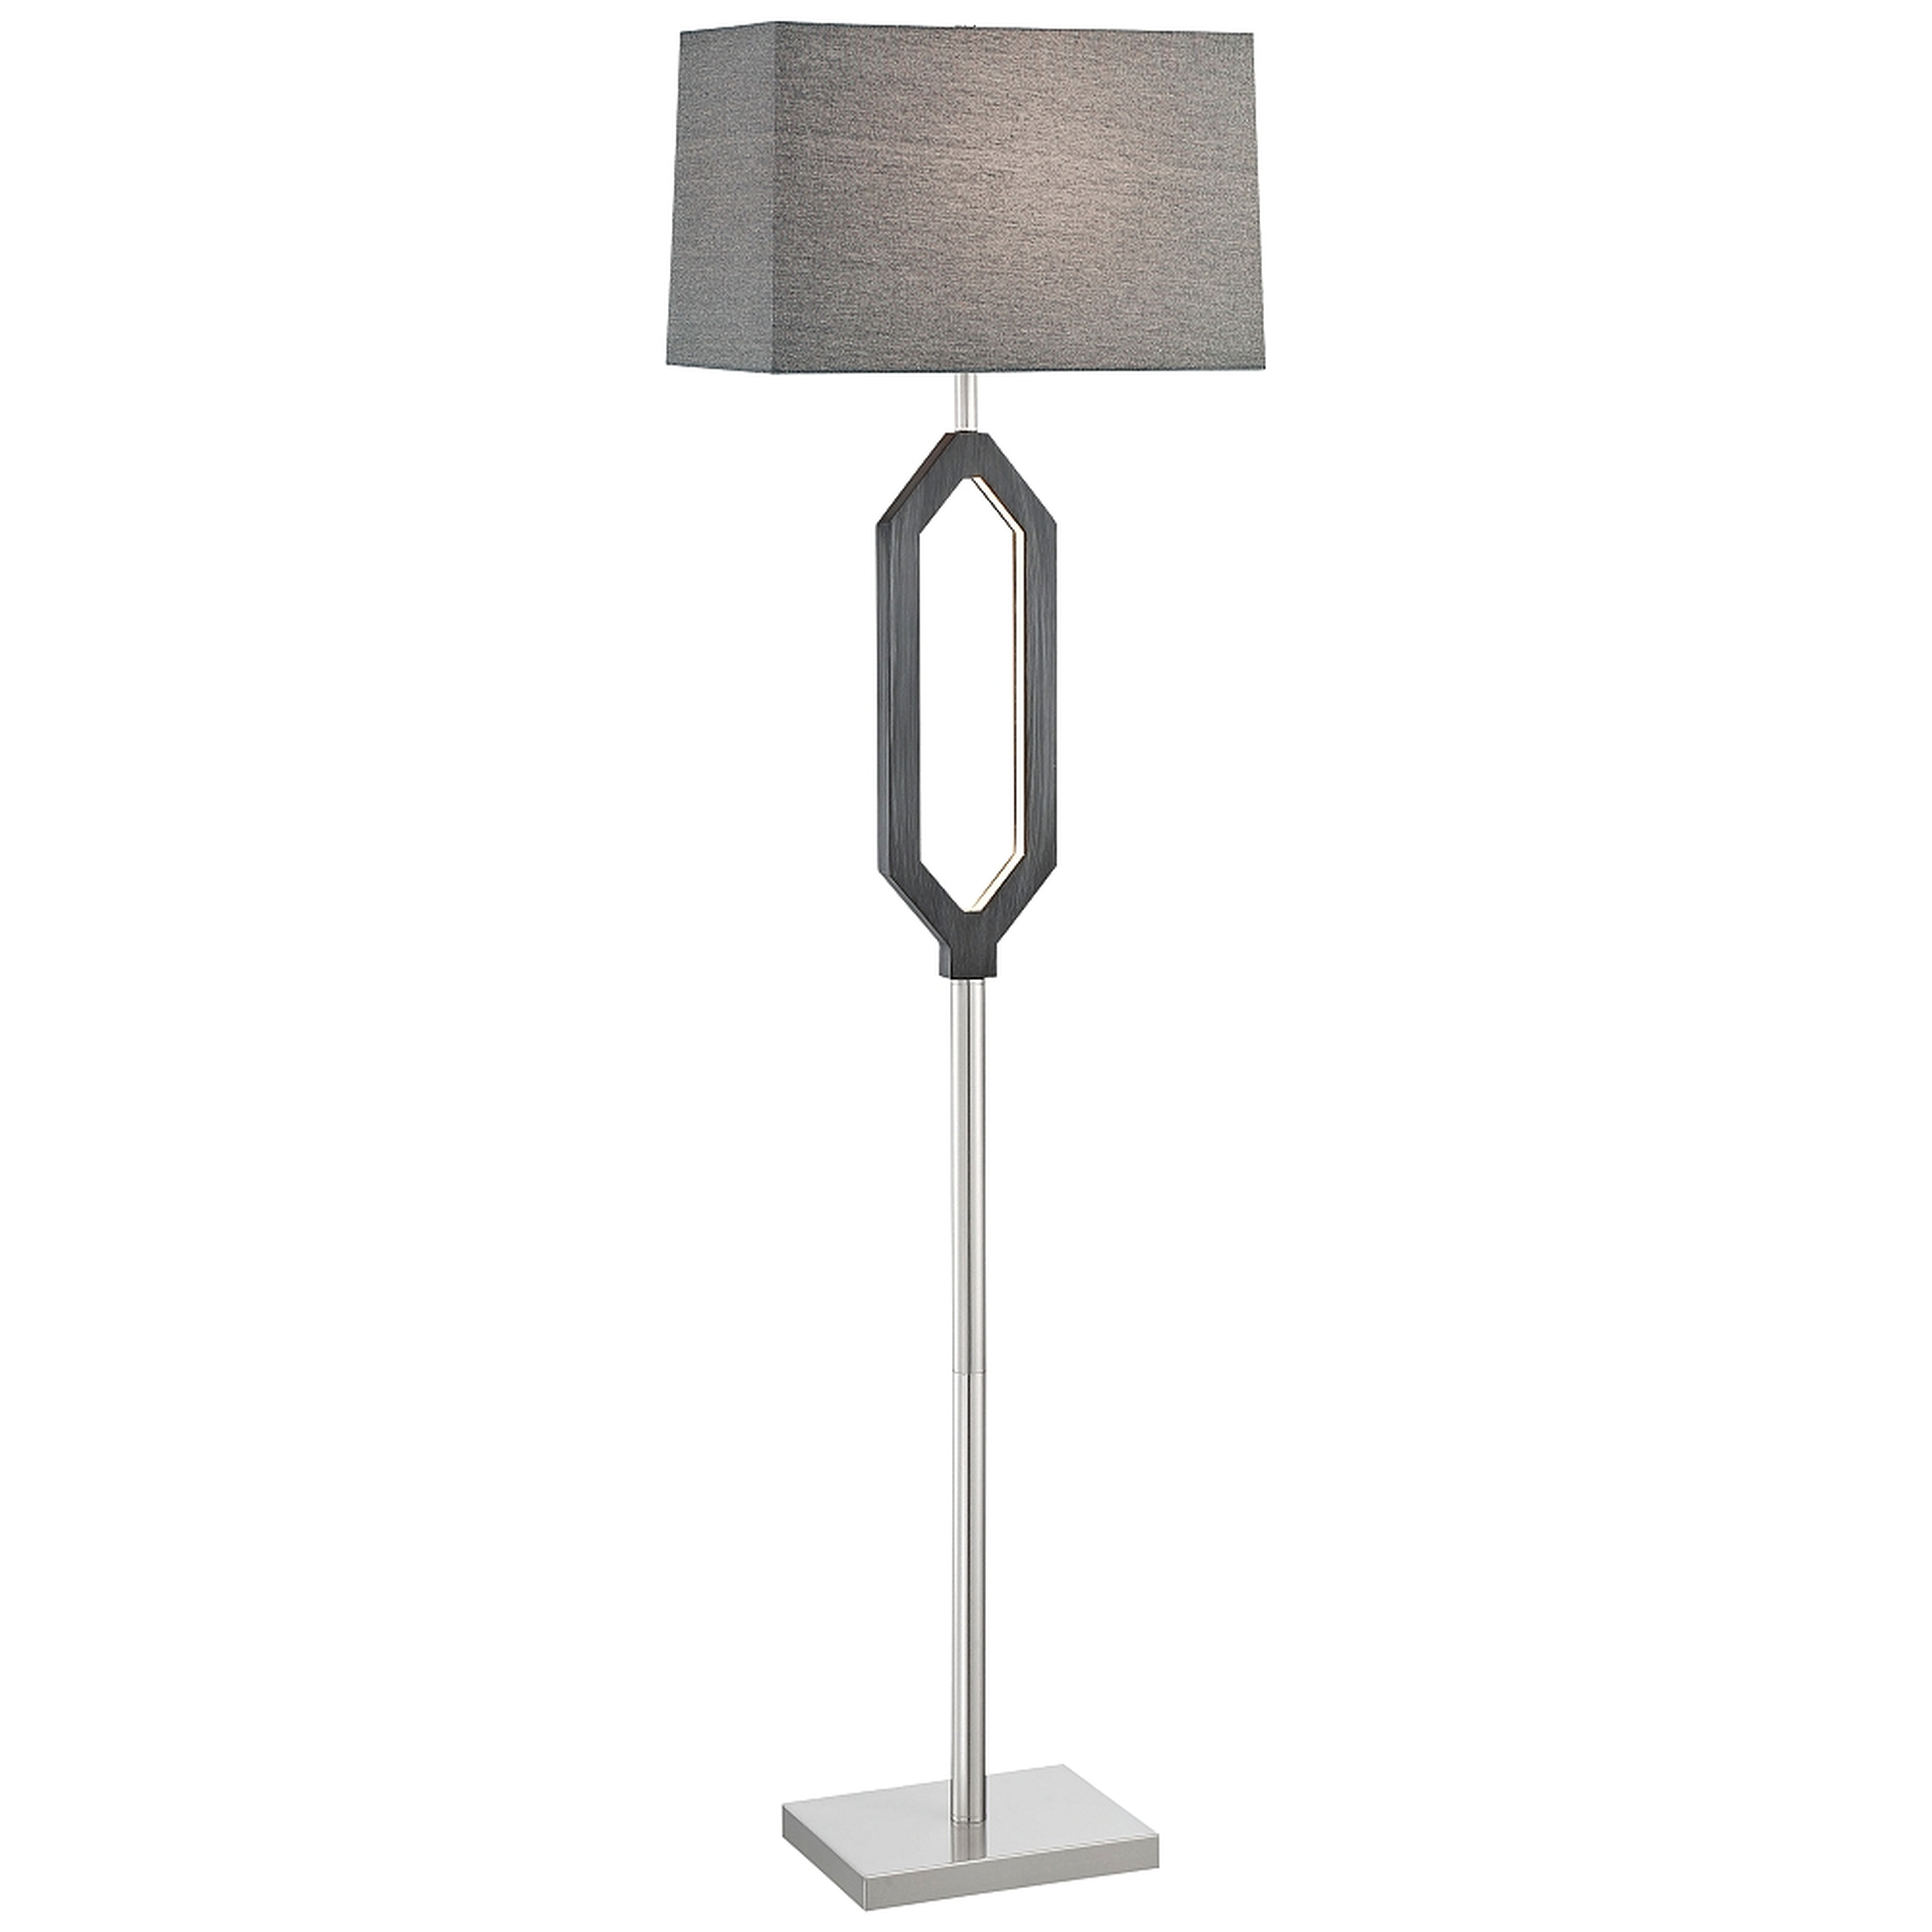 Desmond Charcoal Gray Floor Lamp w/ LED Night Light - Style # 69M28 - Lamps Plus